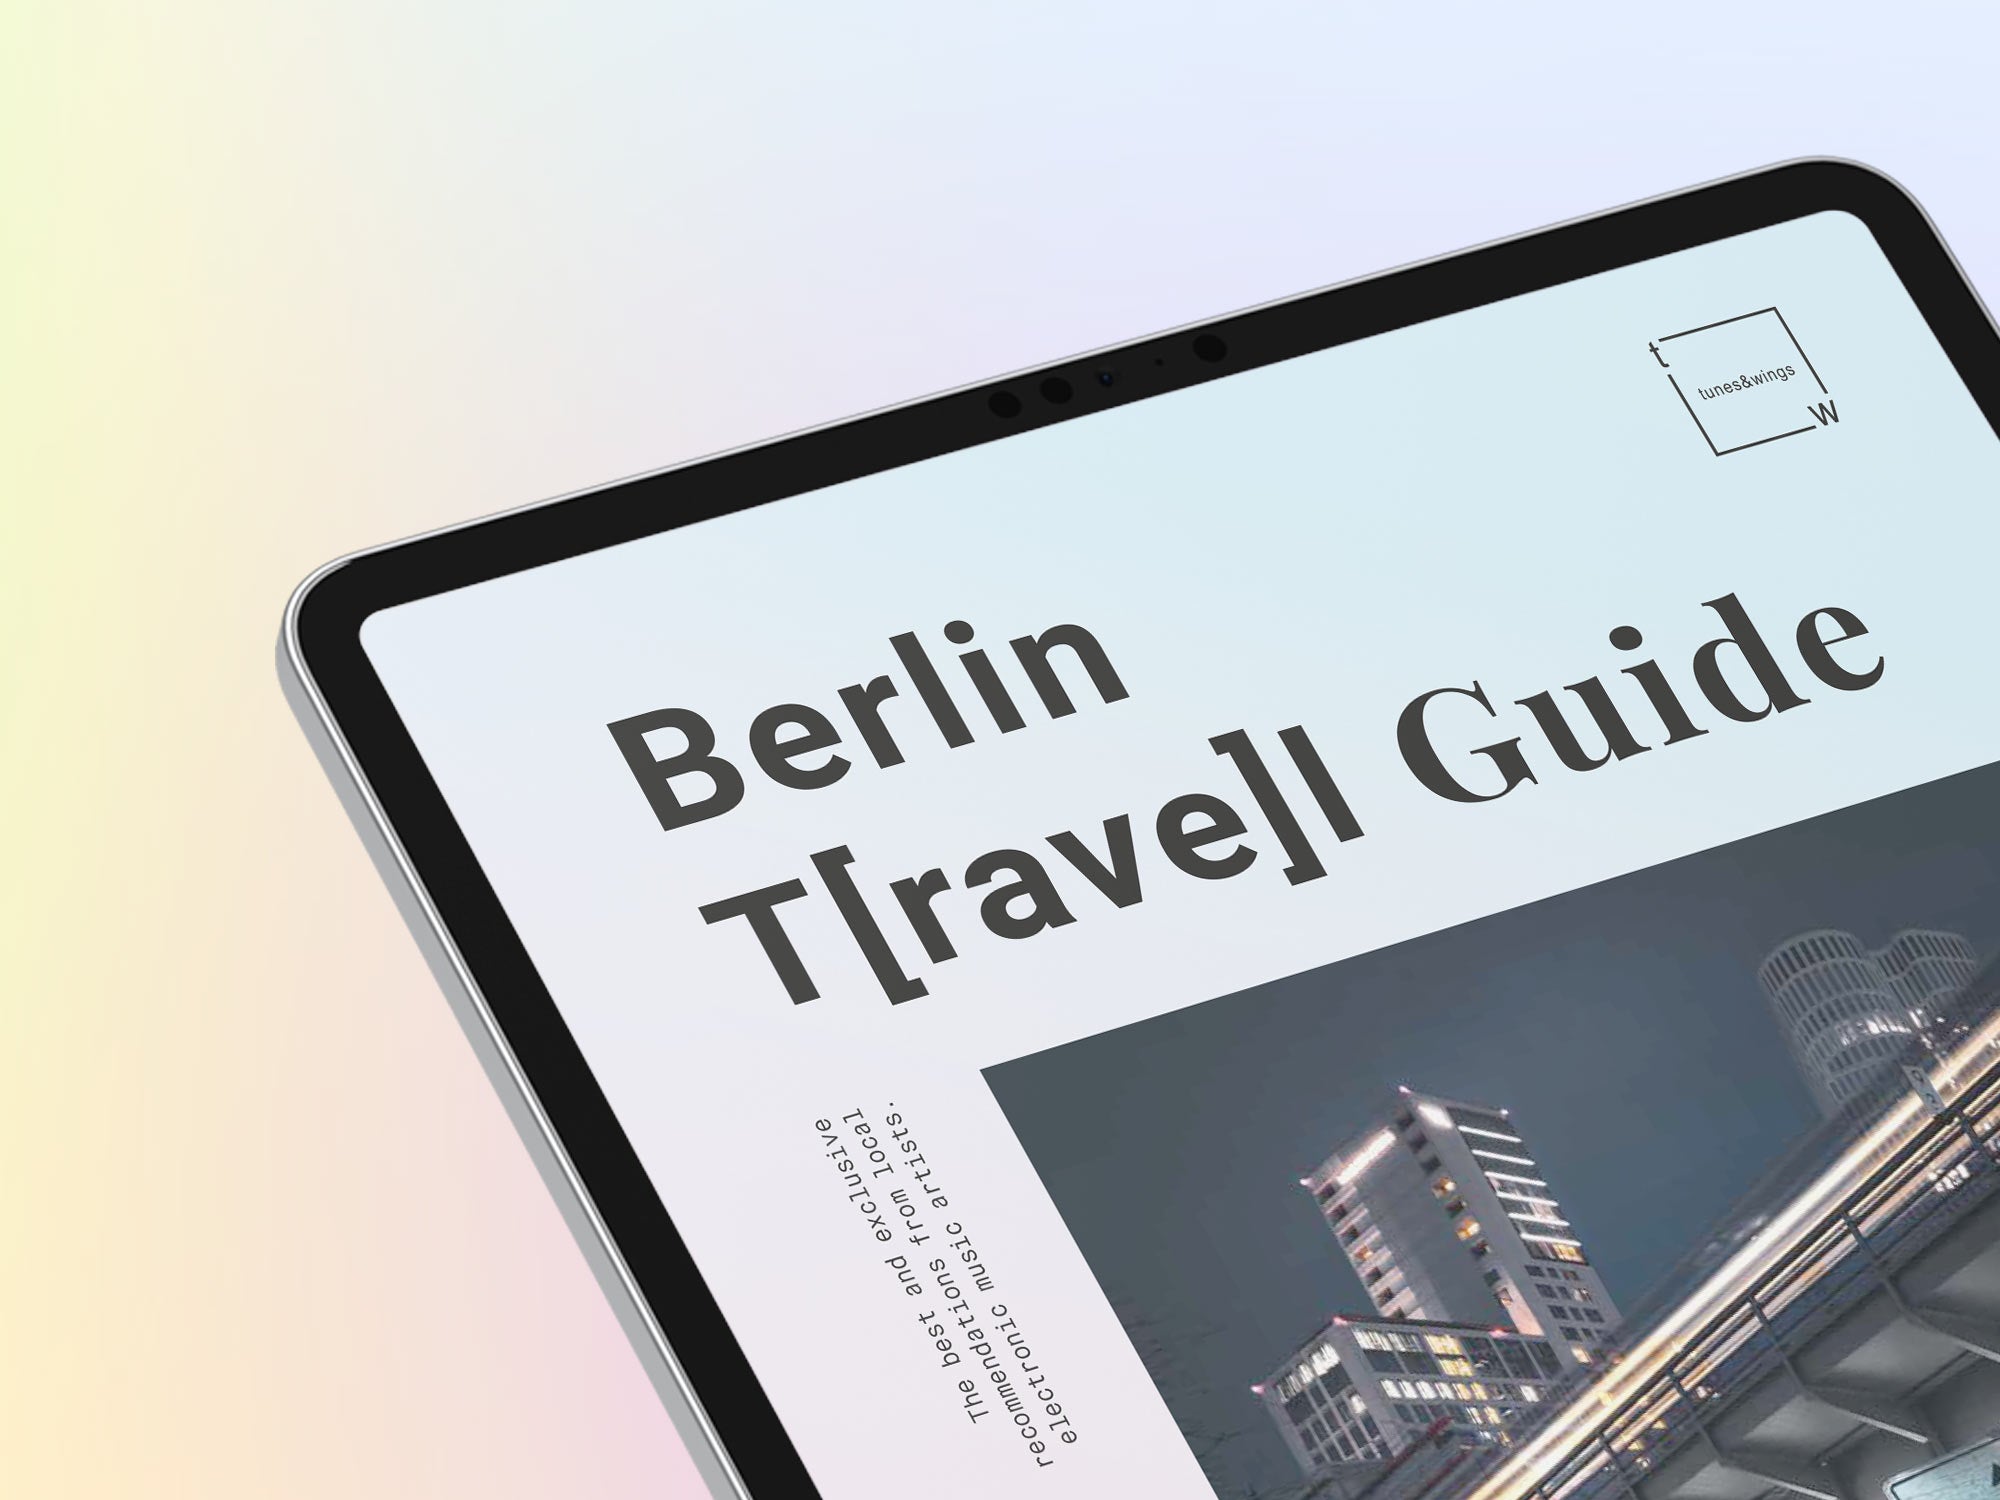 Berlin T[rave]l Guide – digital